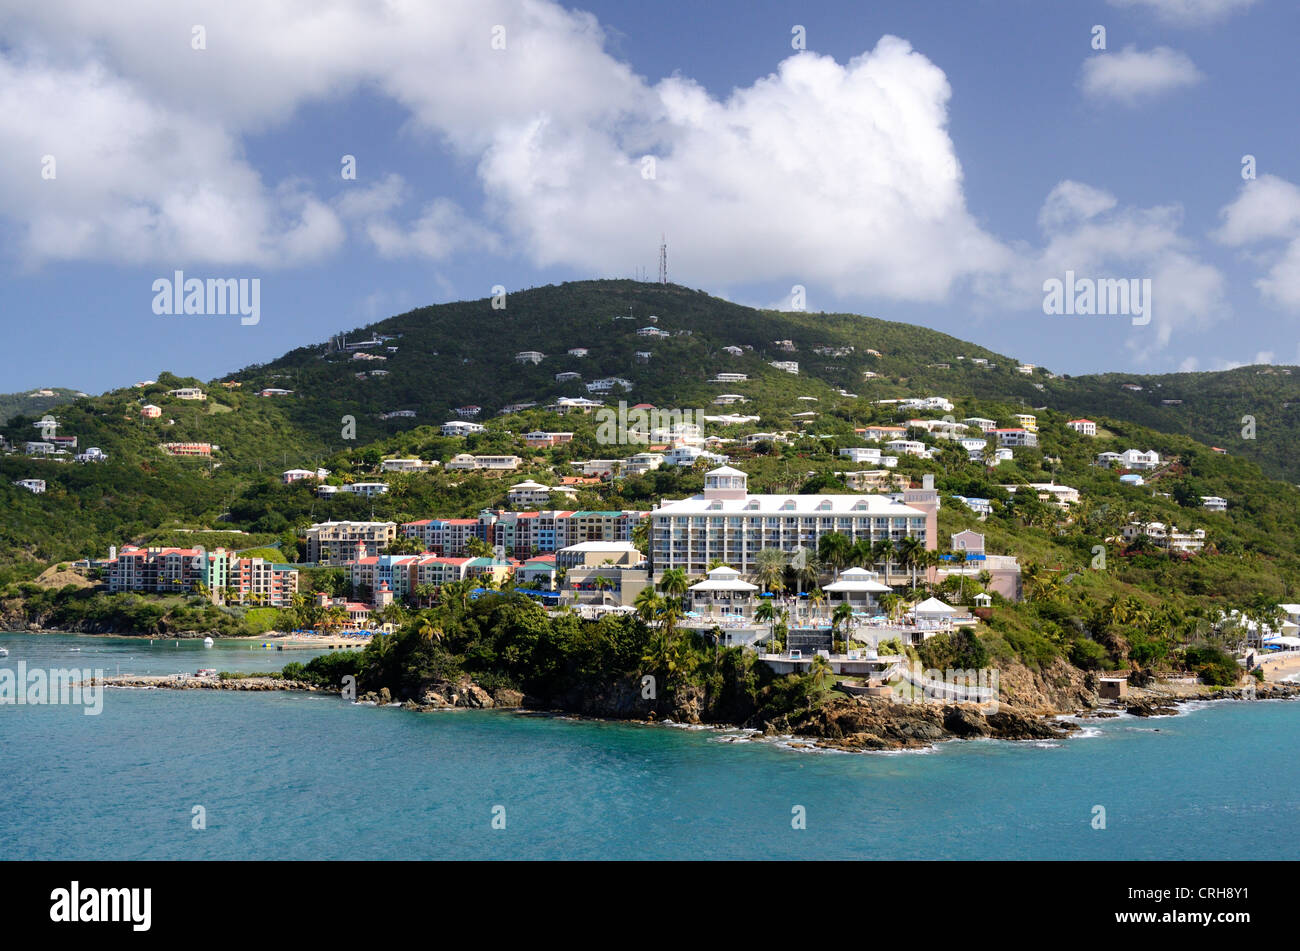 Island scene at Charlotte Amalie, St. Thomas, US Virgin Islands. Stock Photo